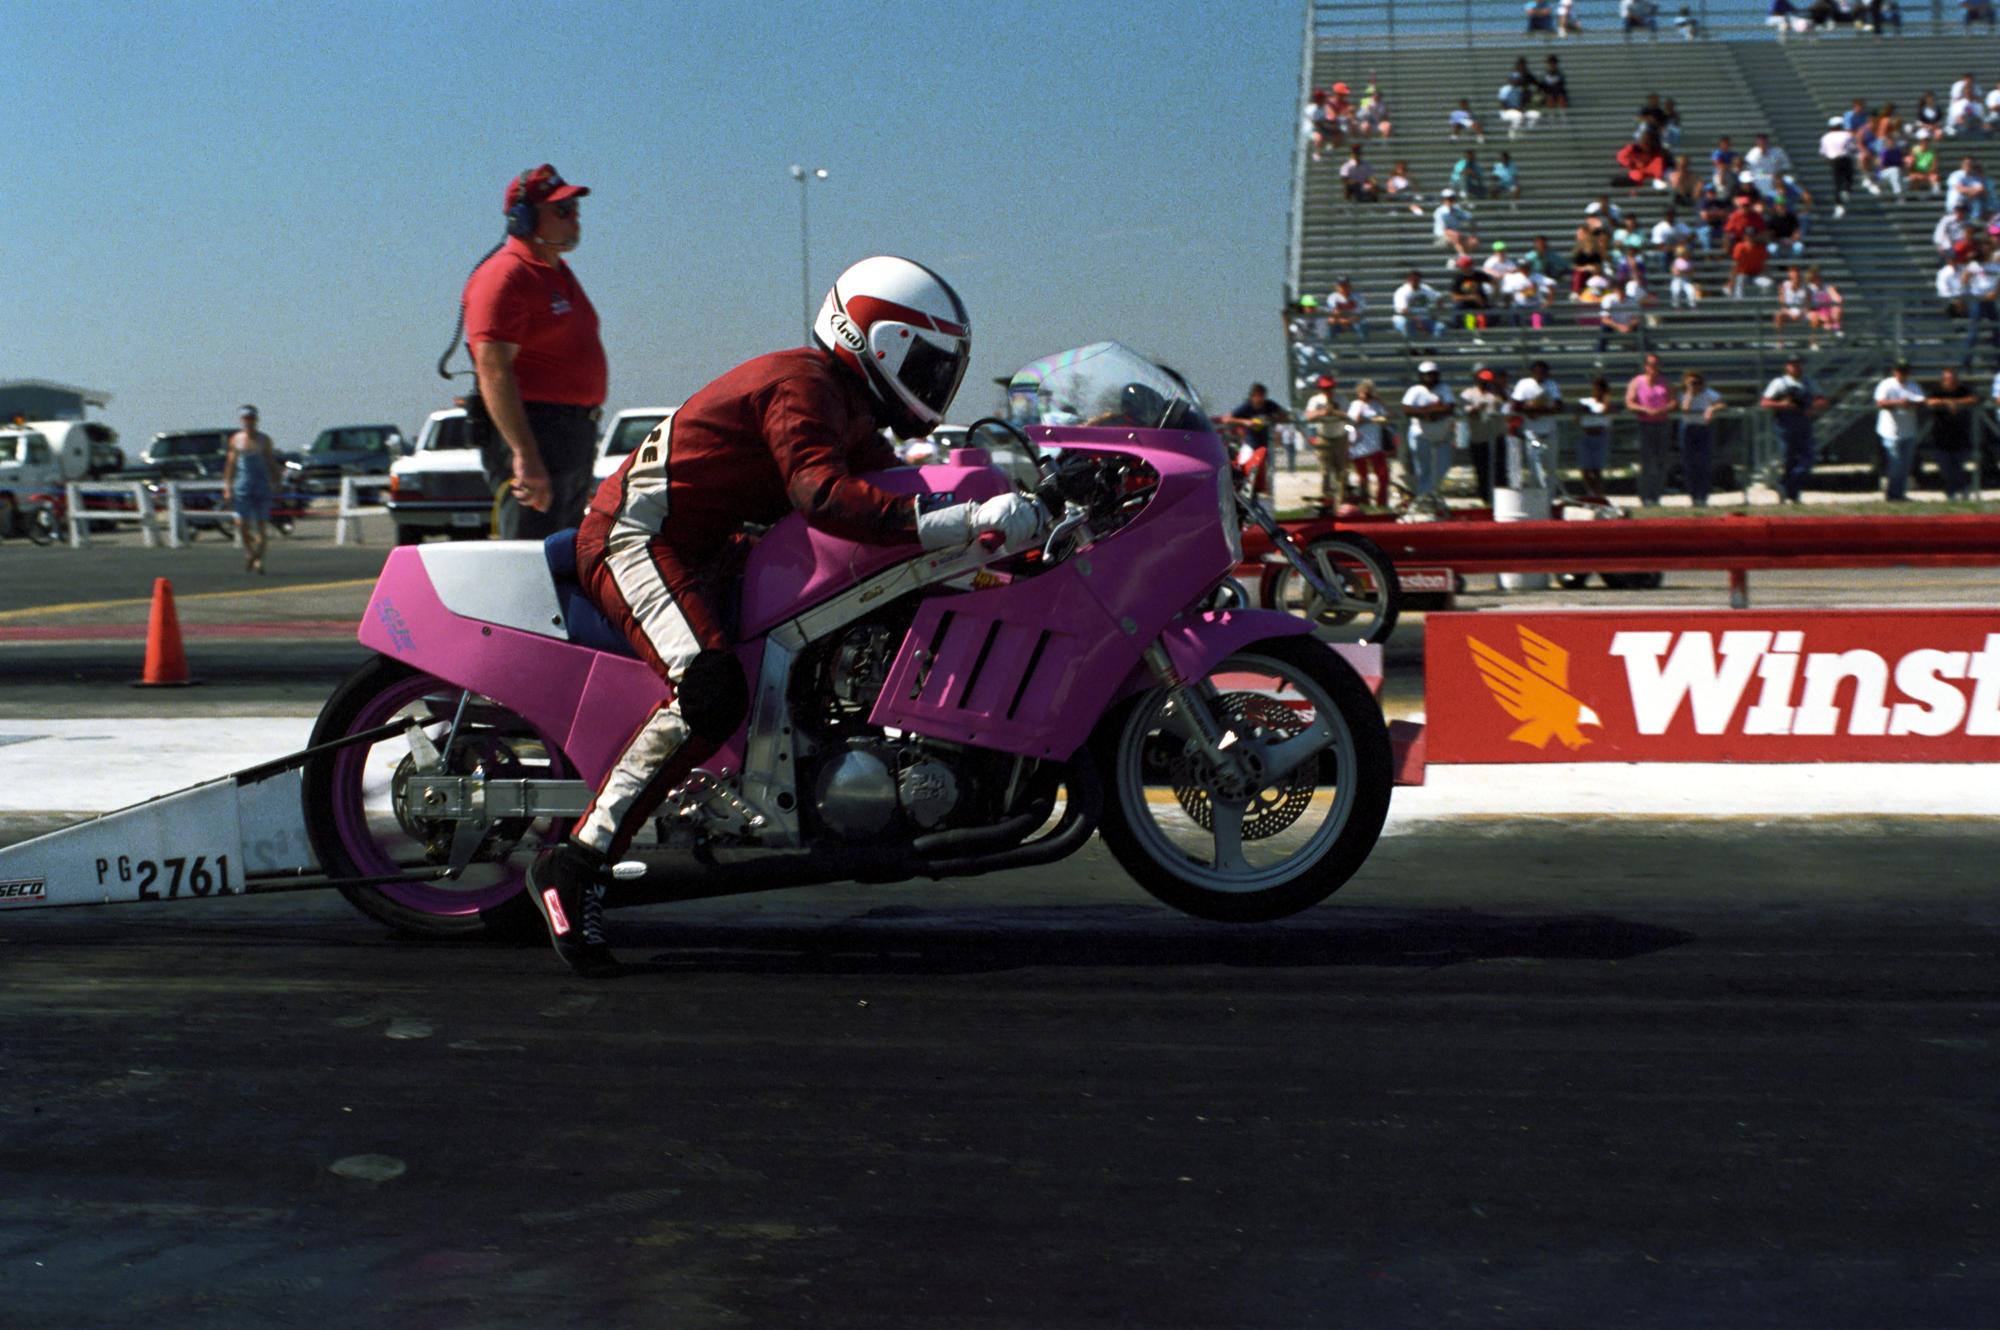 Texas Motor Drag Racing (1991) - Drag Racing Warm Up Start #7